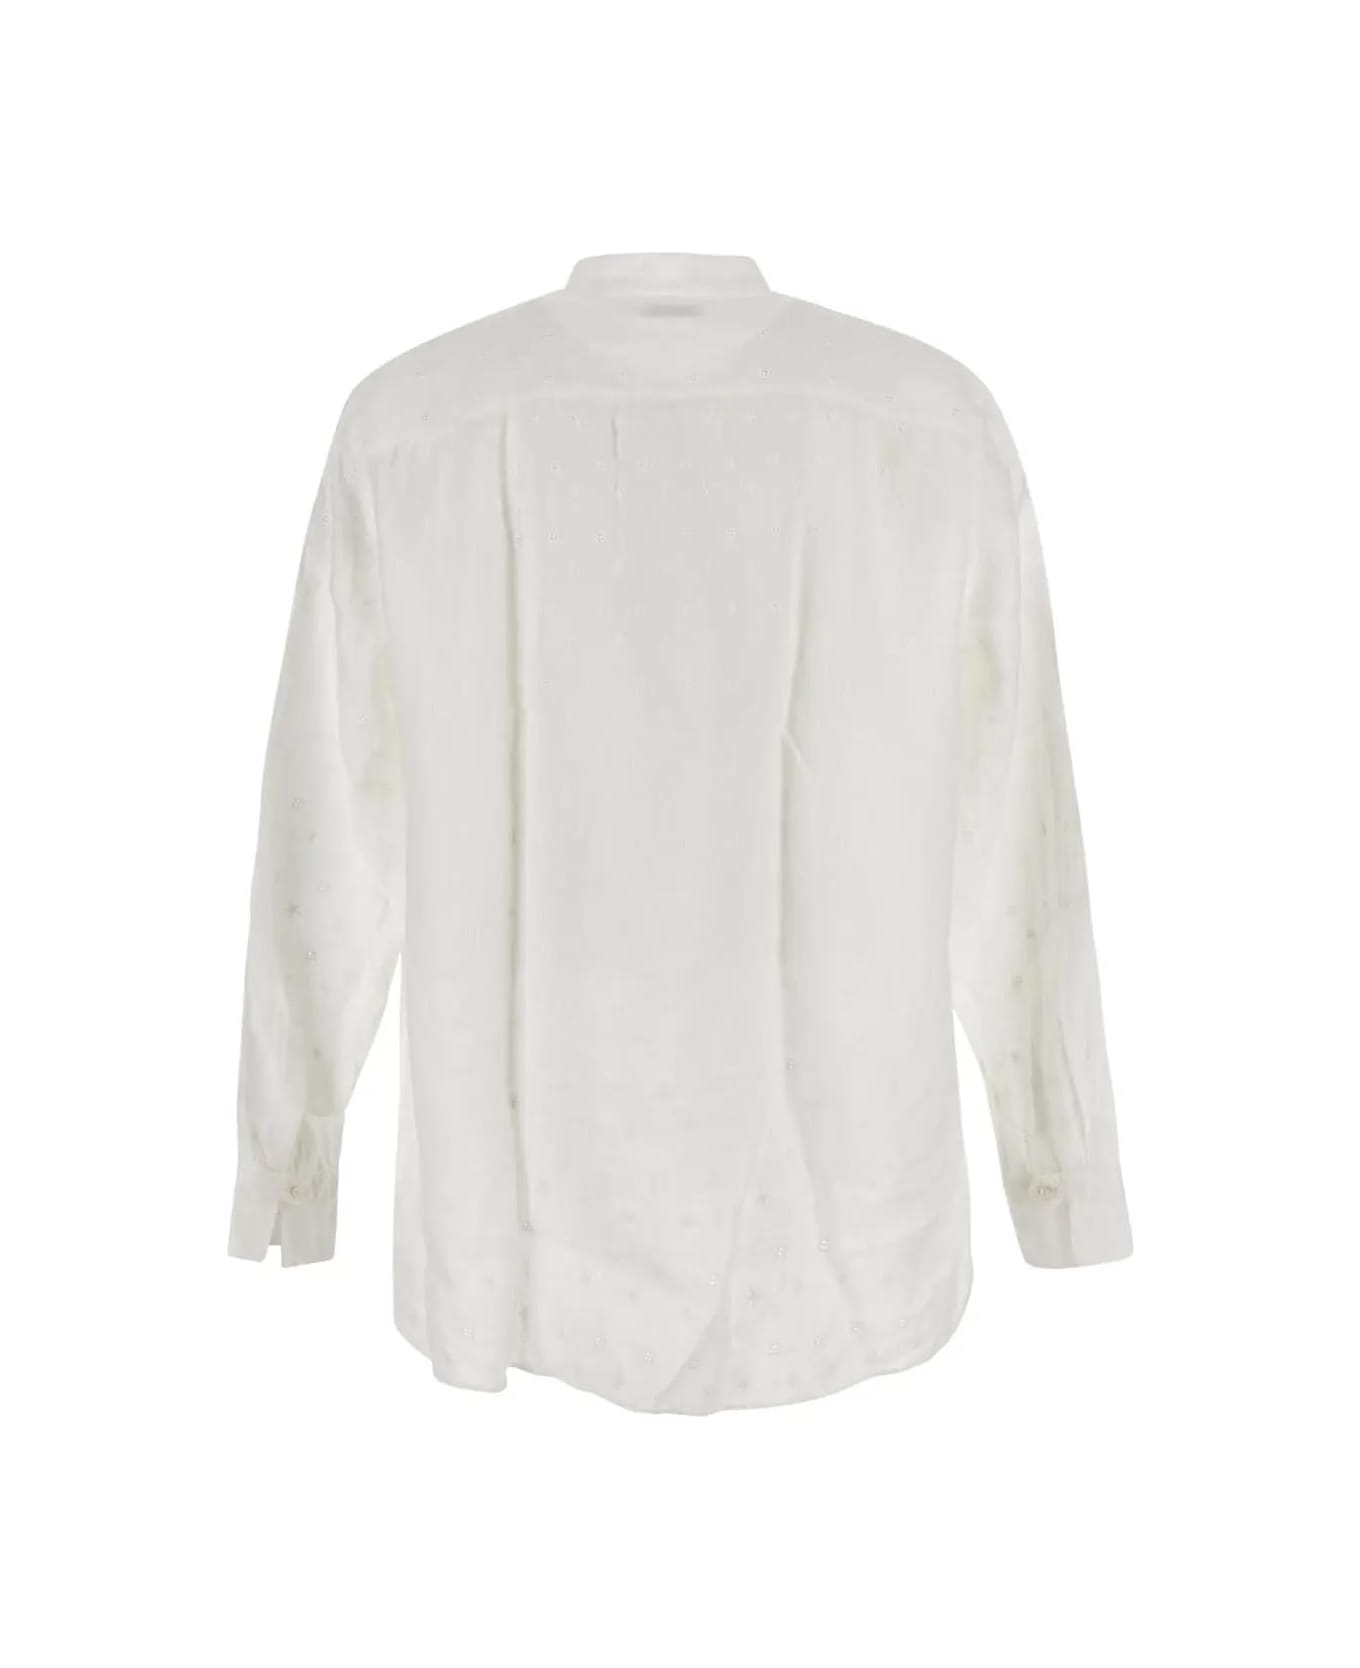 Tagliatore Embroidered Shirt - Bianco